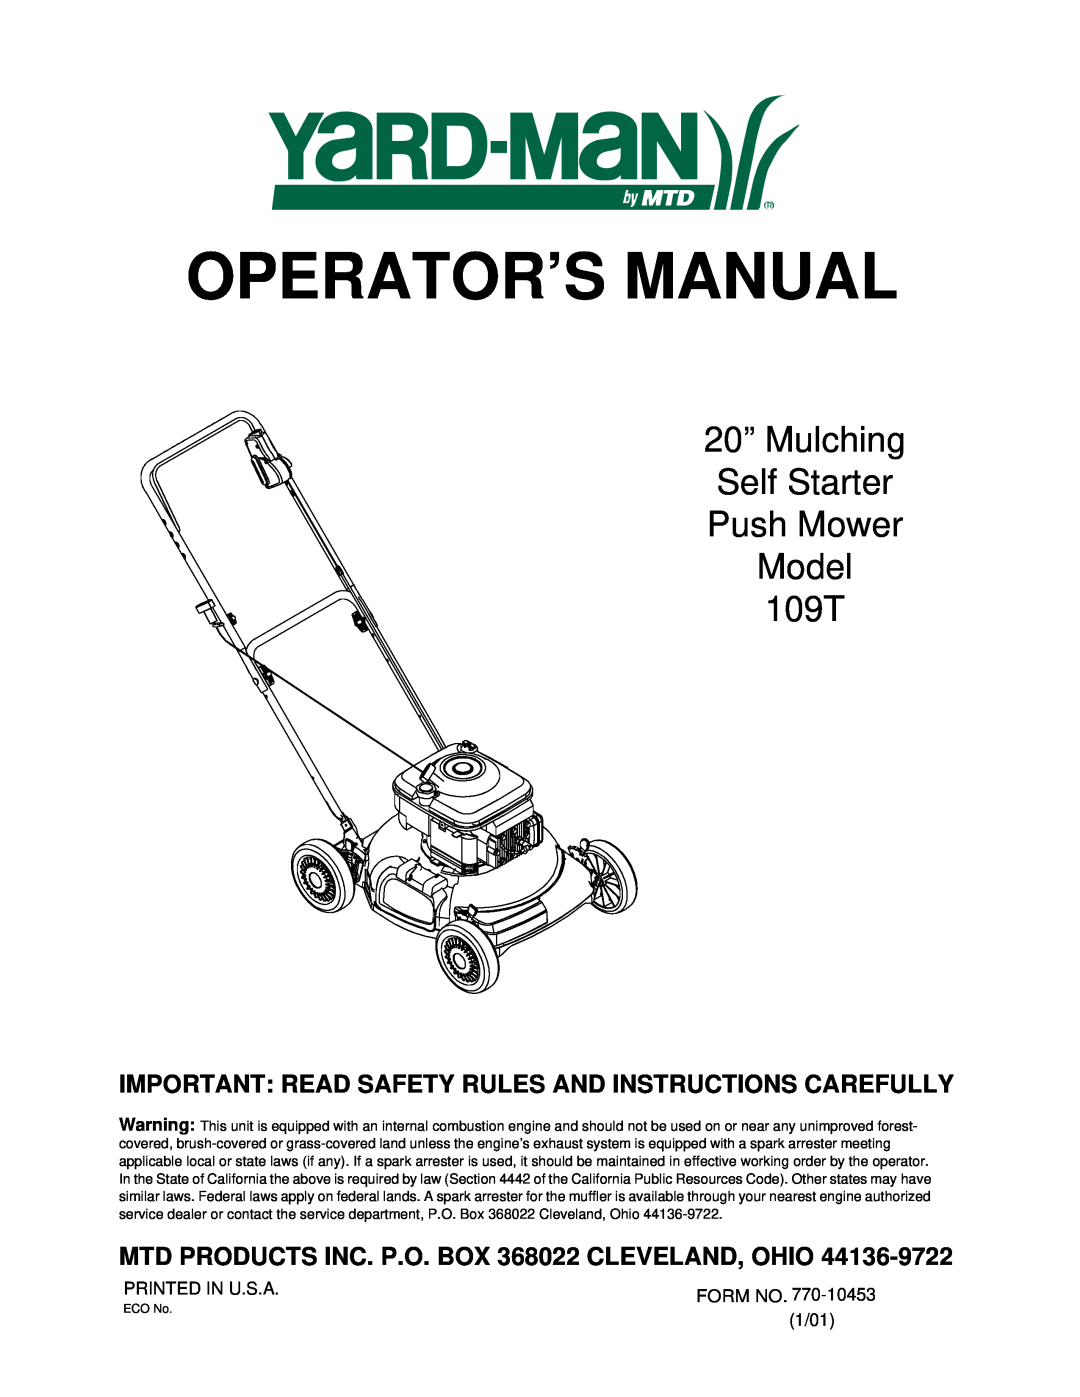 Yard-Man manual Operator’S Manual, 20” Mulching Self Starter Push Mower Model 109T 